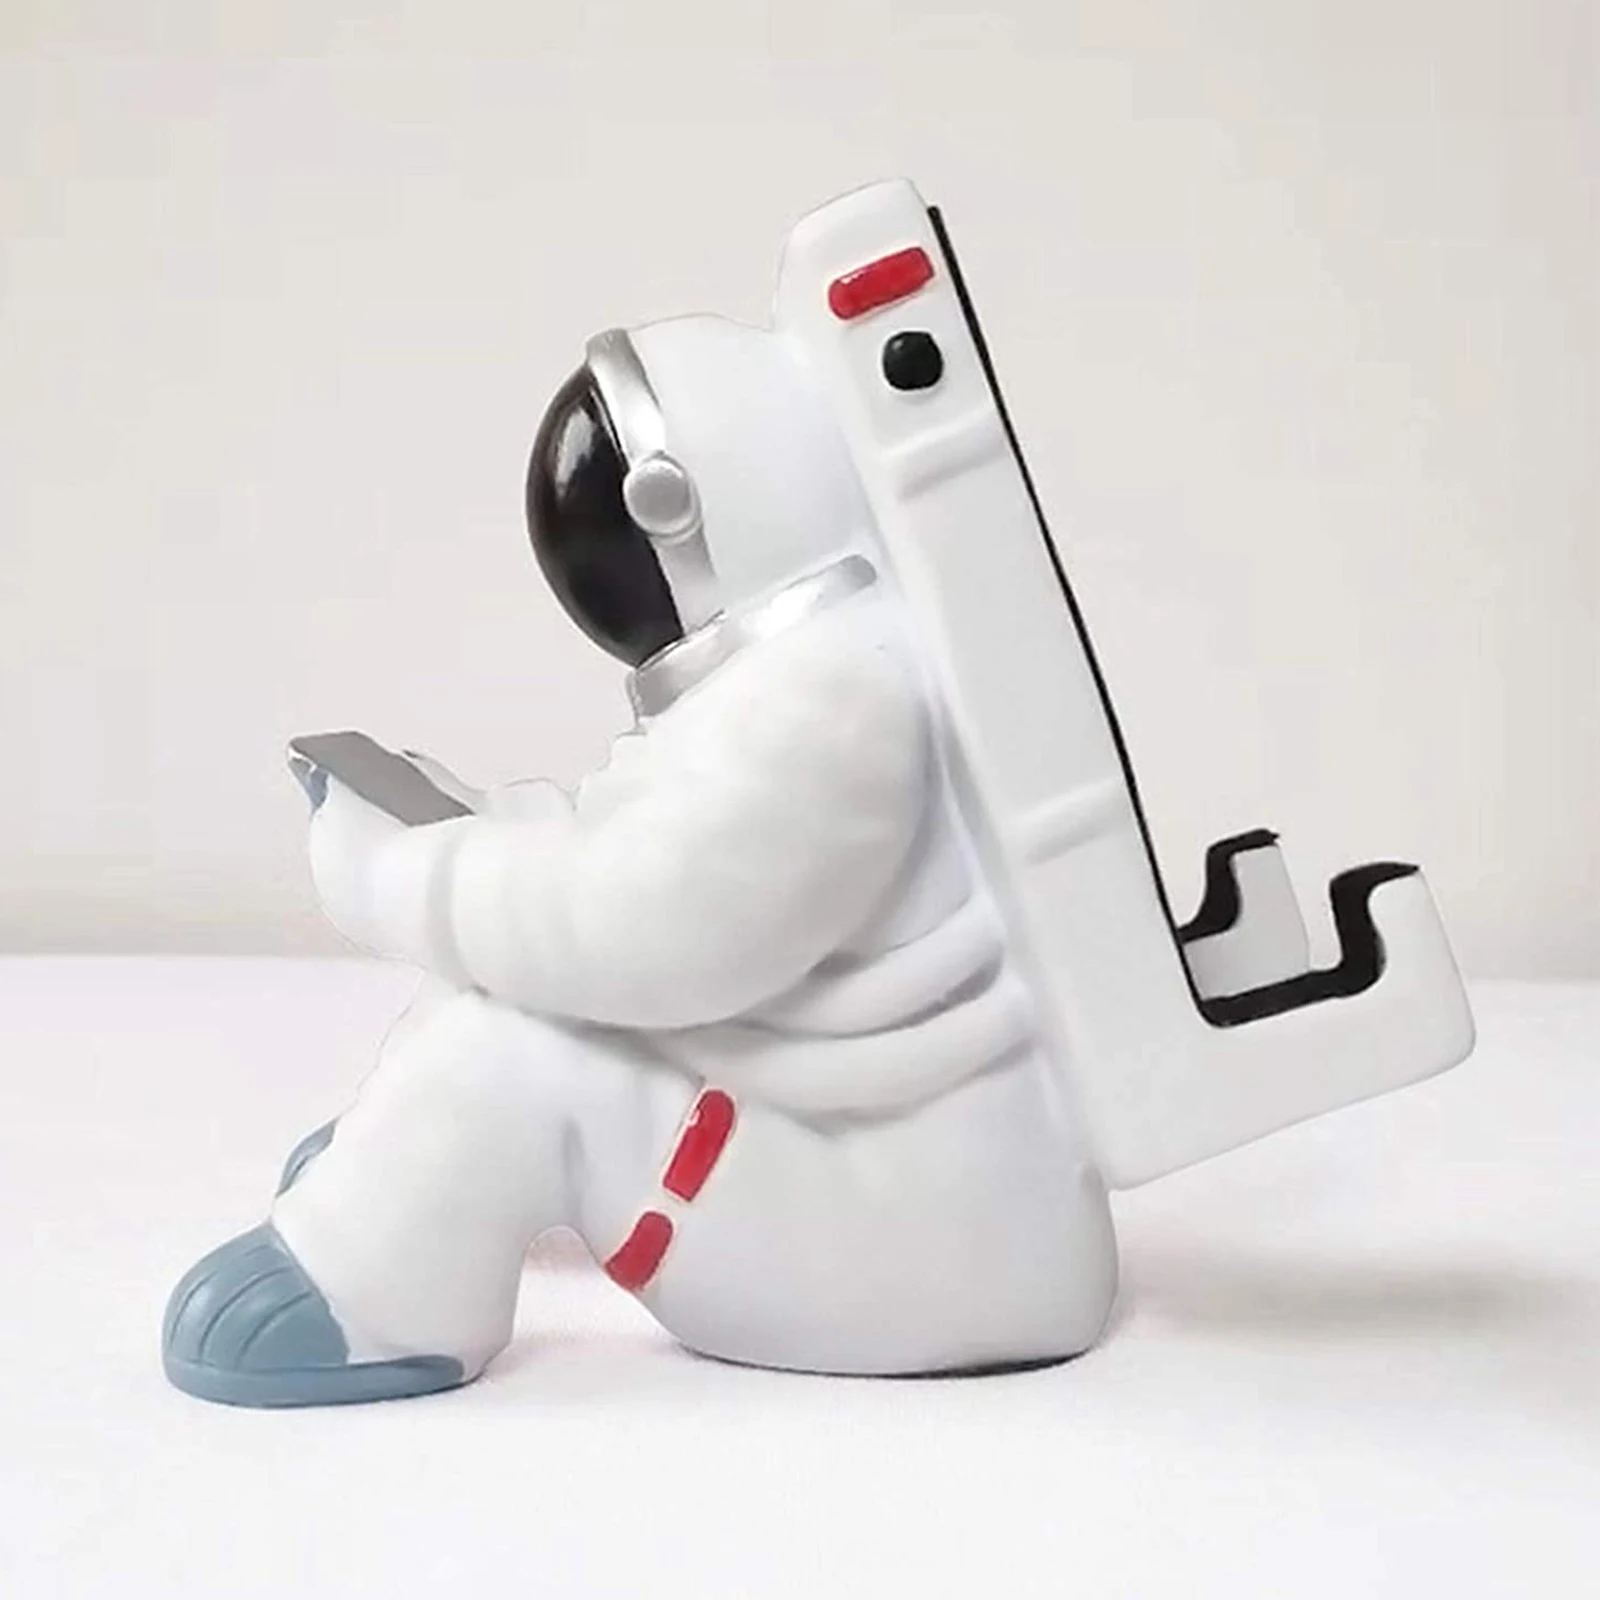 cell phone stand Astronaut Phone Holder Desktop Polyresin Cellphone Stand Dock Bracket Birthday Gift cell phone stand holder Holders & Stands